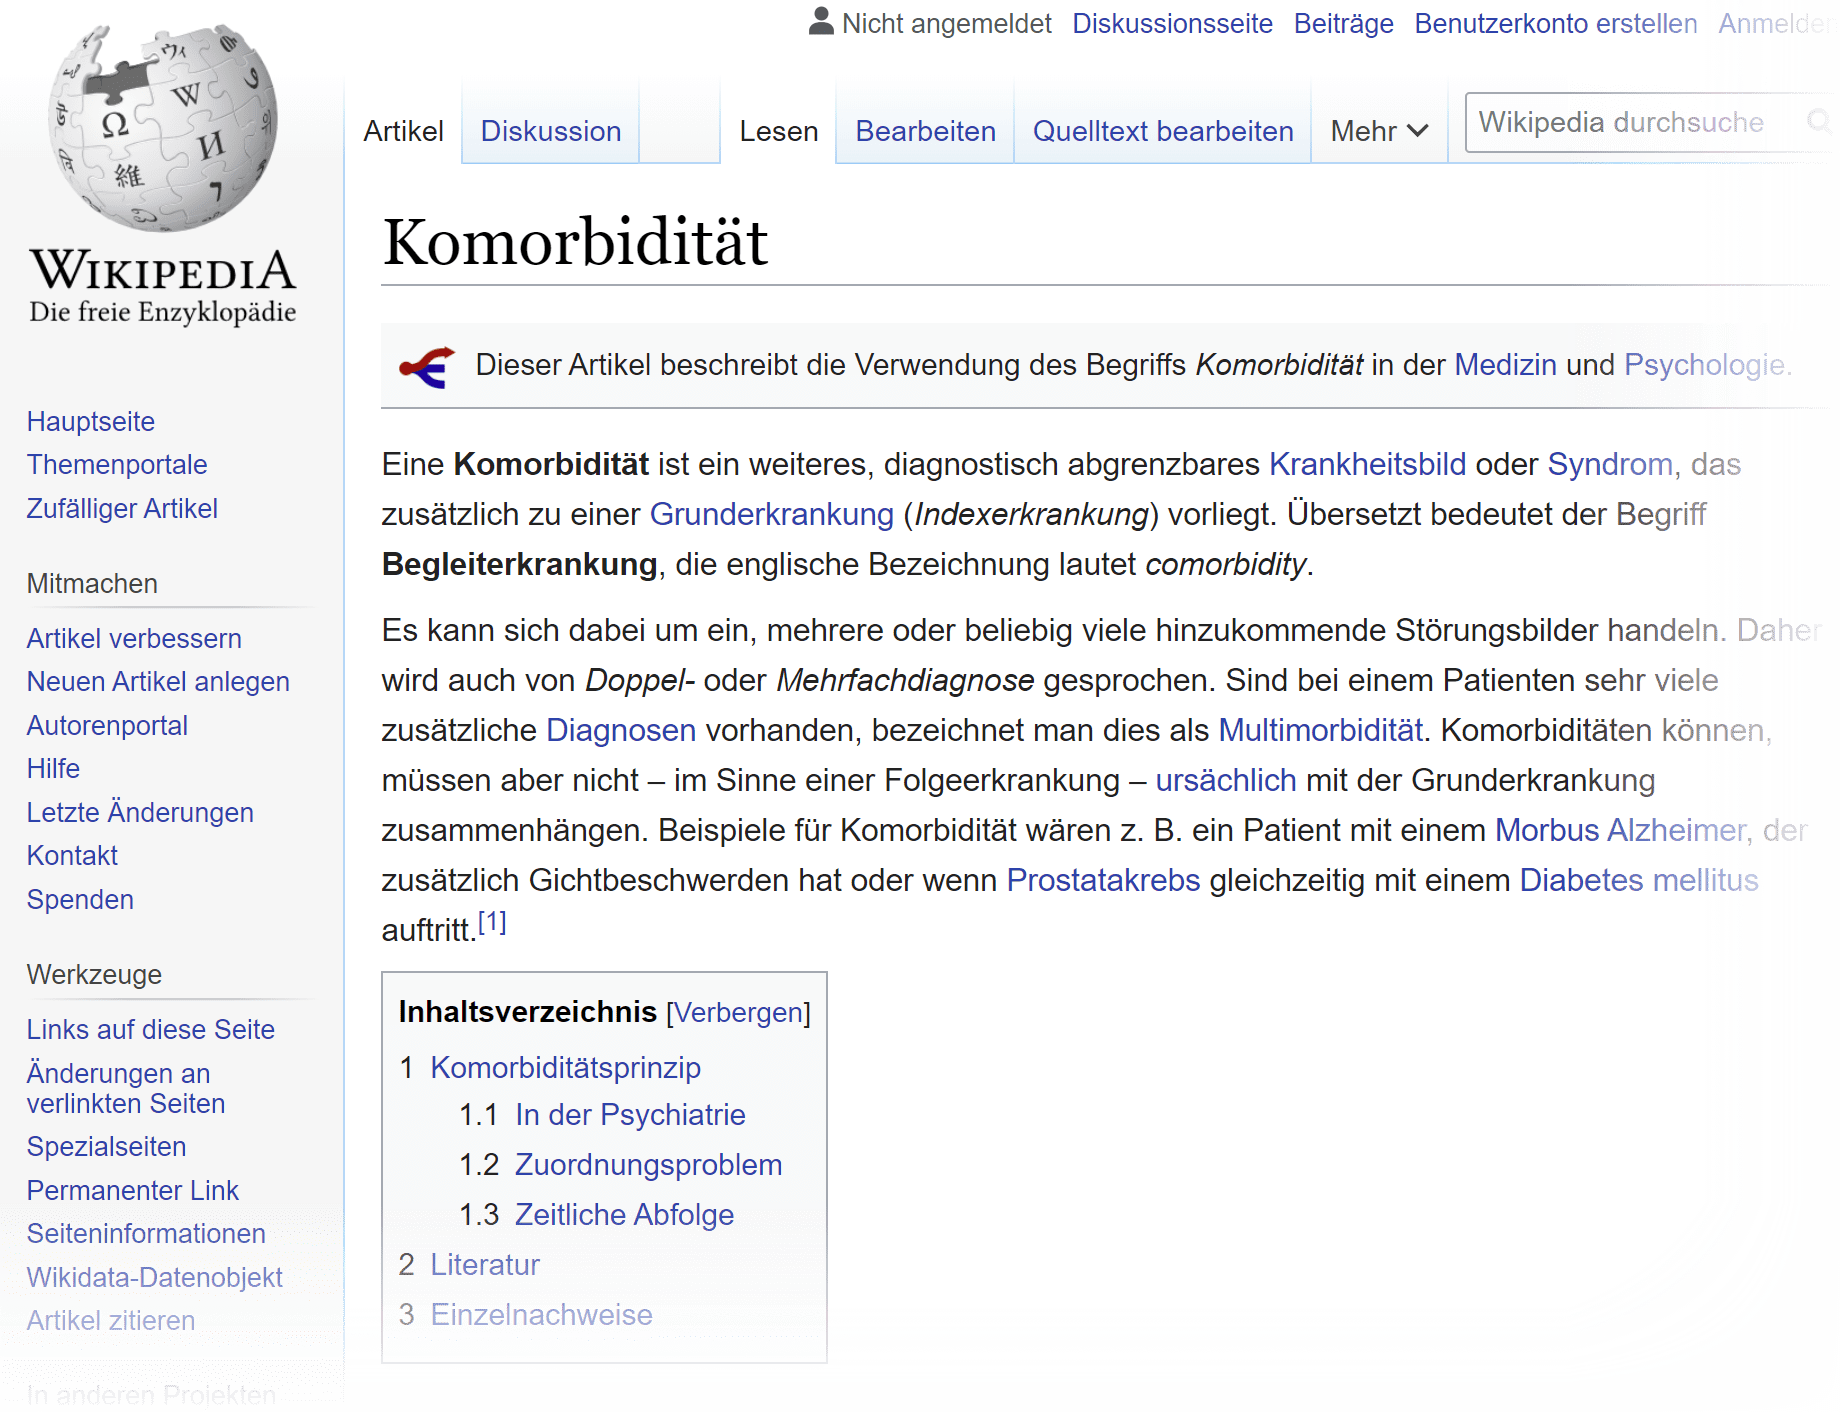 Komorbidität Definition laut Wikipedia (Screenshot https://de.wikipedia.org/wiki/Komorbidit%C3%A4t)